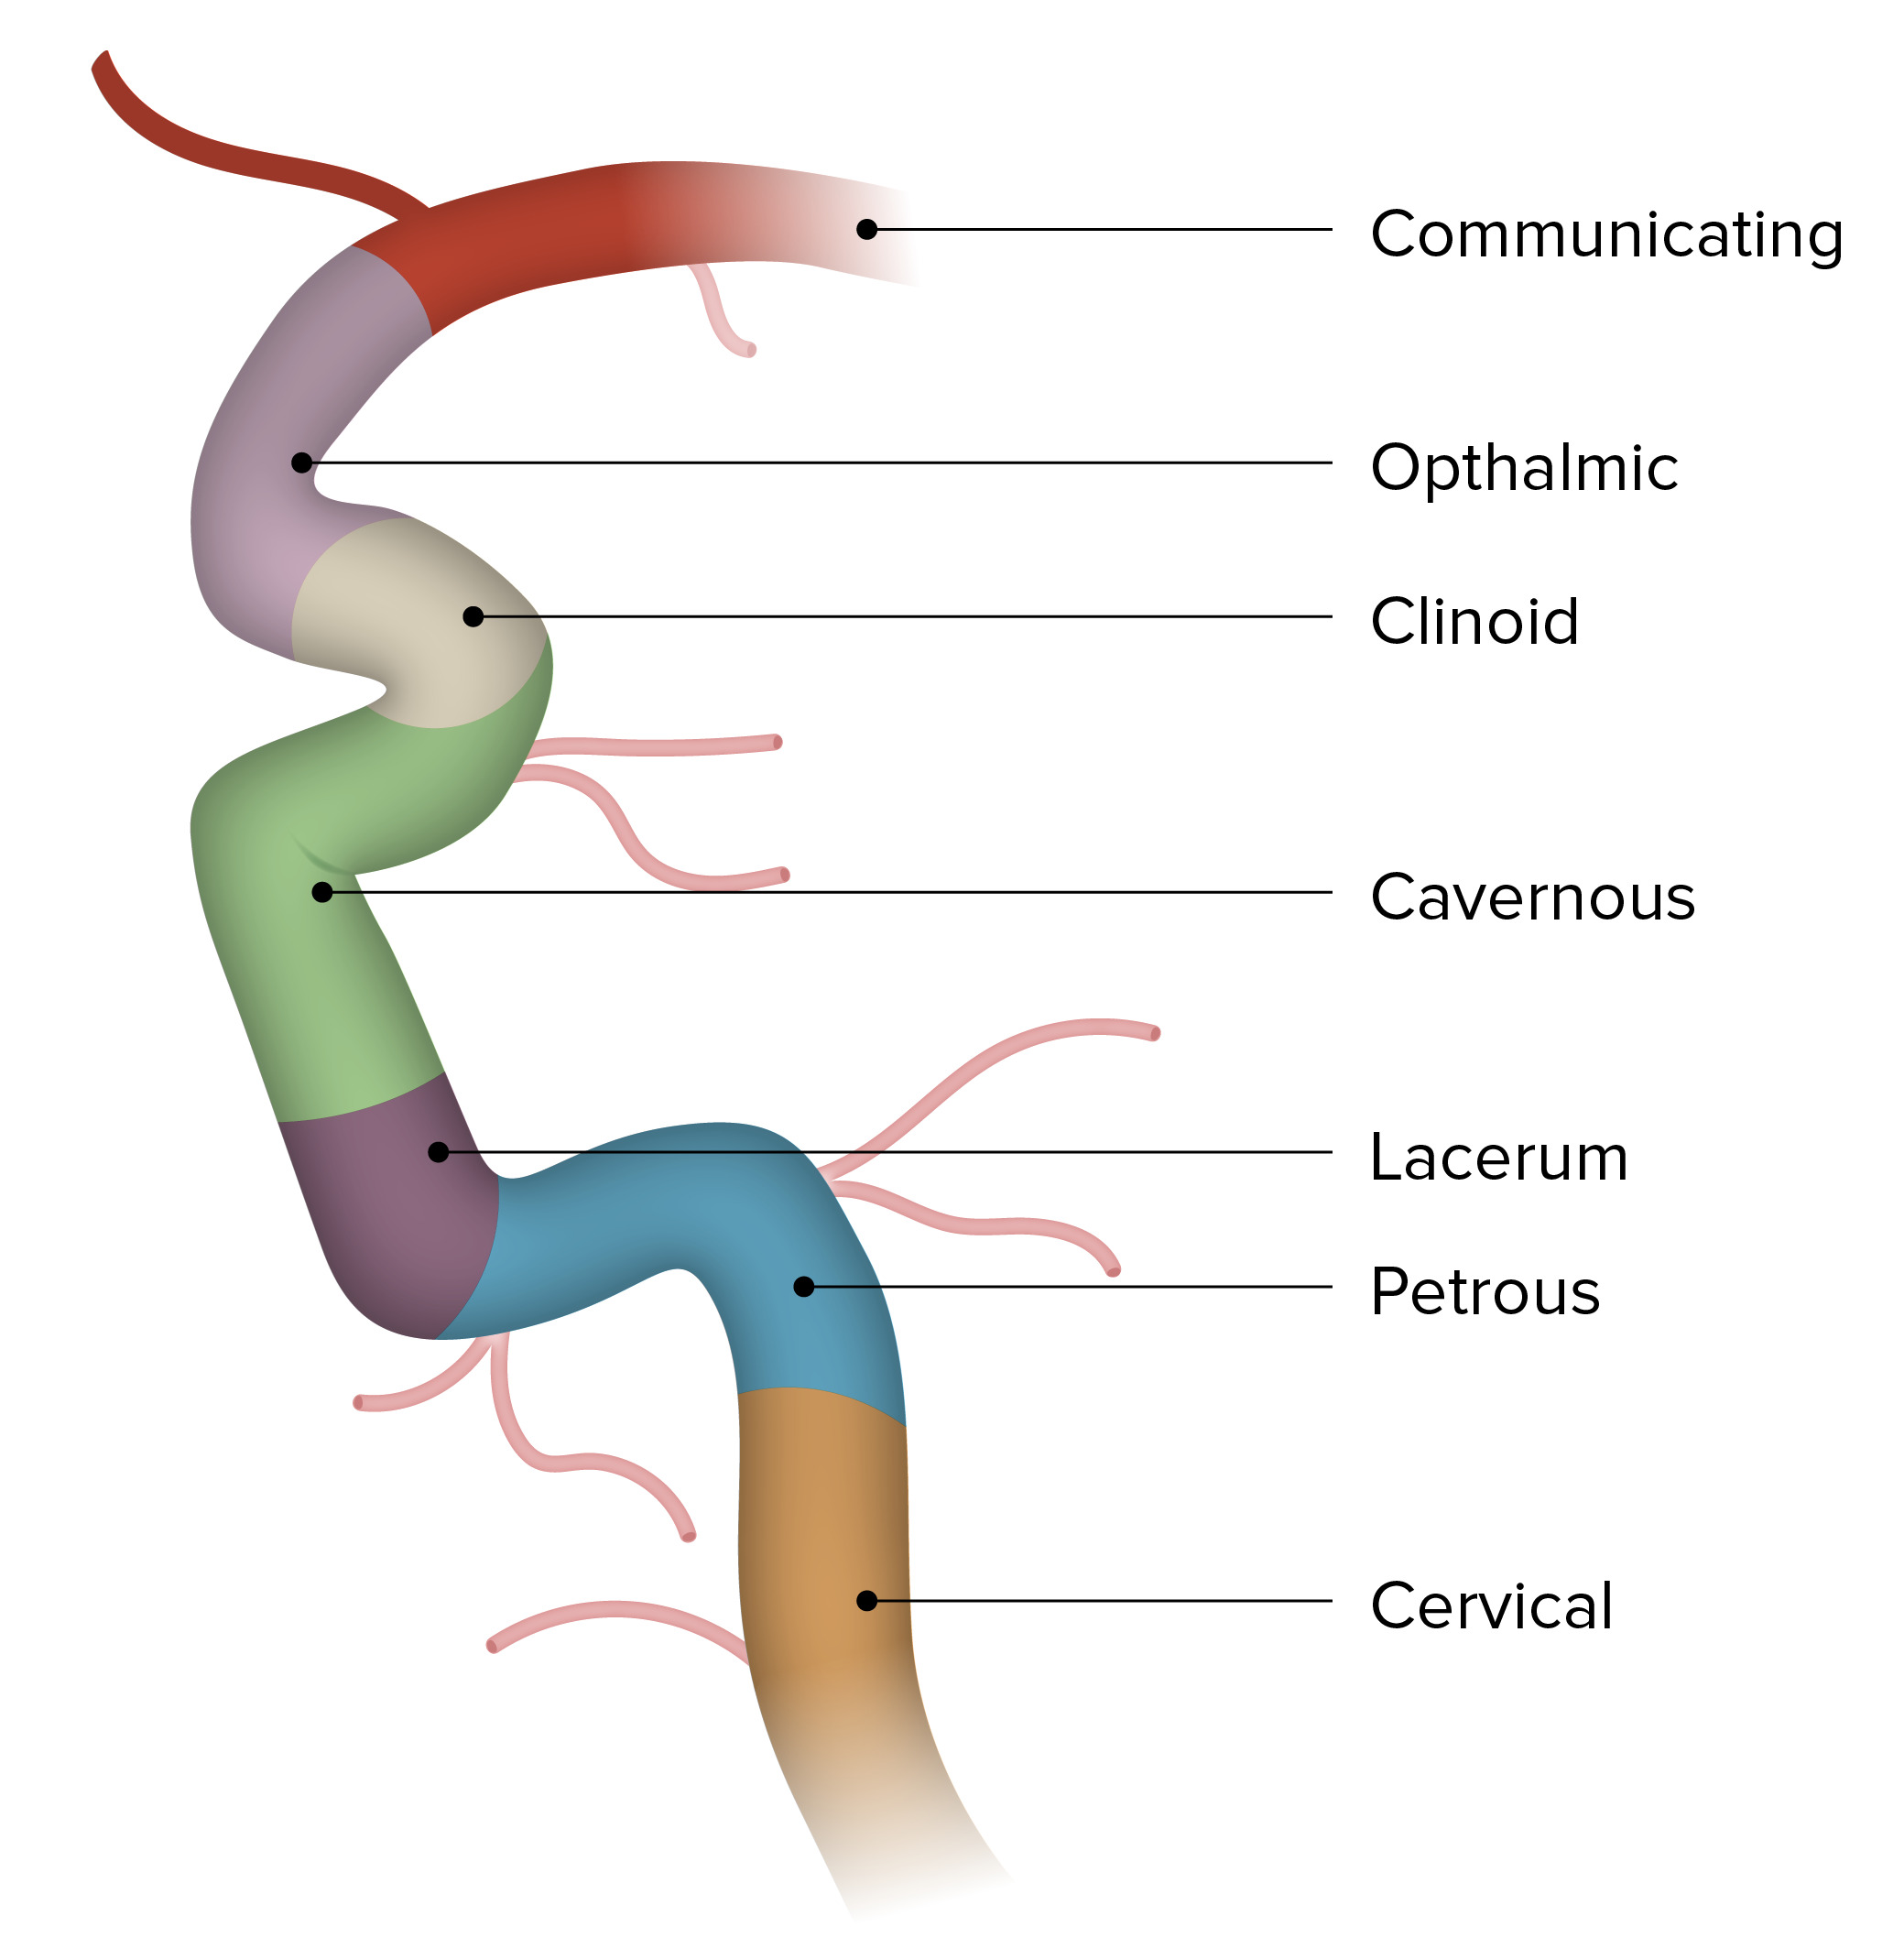 internal carotid artery branches mnemonic